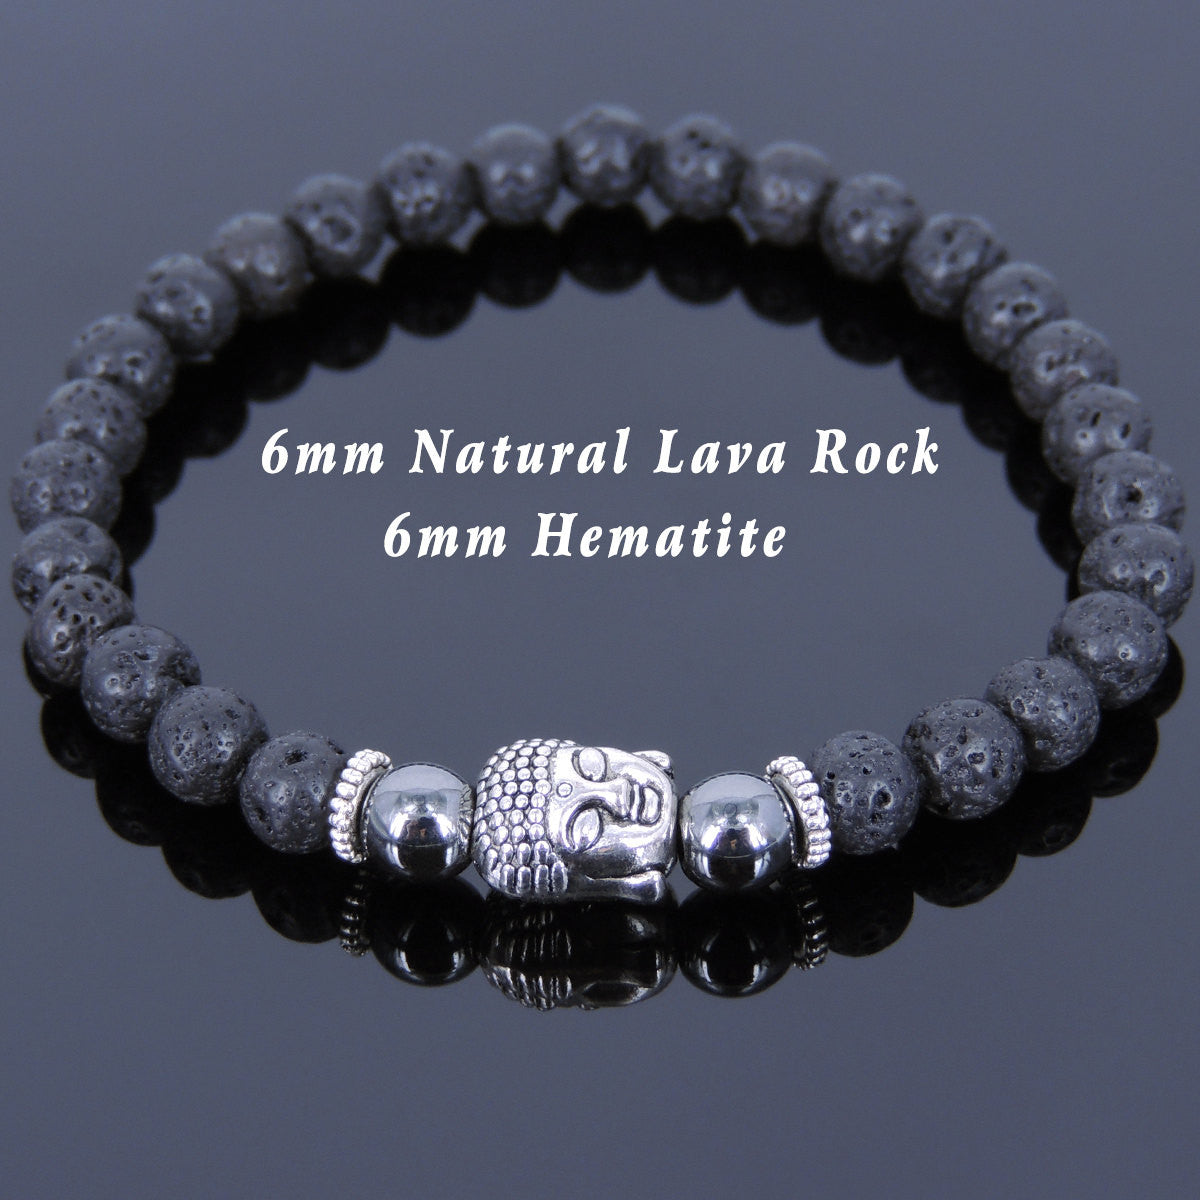 6mm Hematite & Lava Rock Healing Gemstone Bracelet with Tibetan Silver Sakyamuni Buddha & Spacers - Handmade by Gem & Silver TSB125